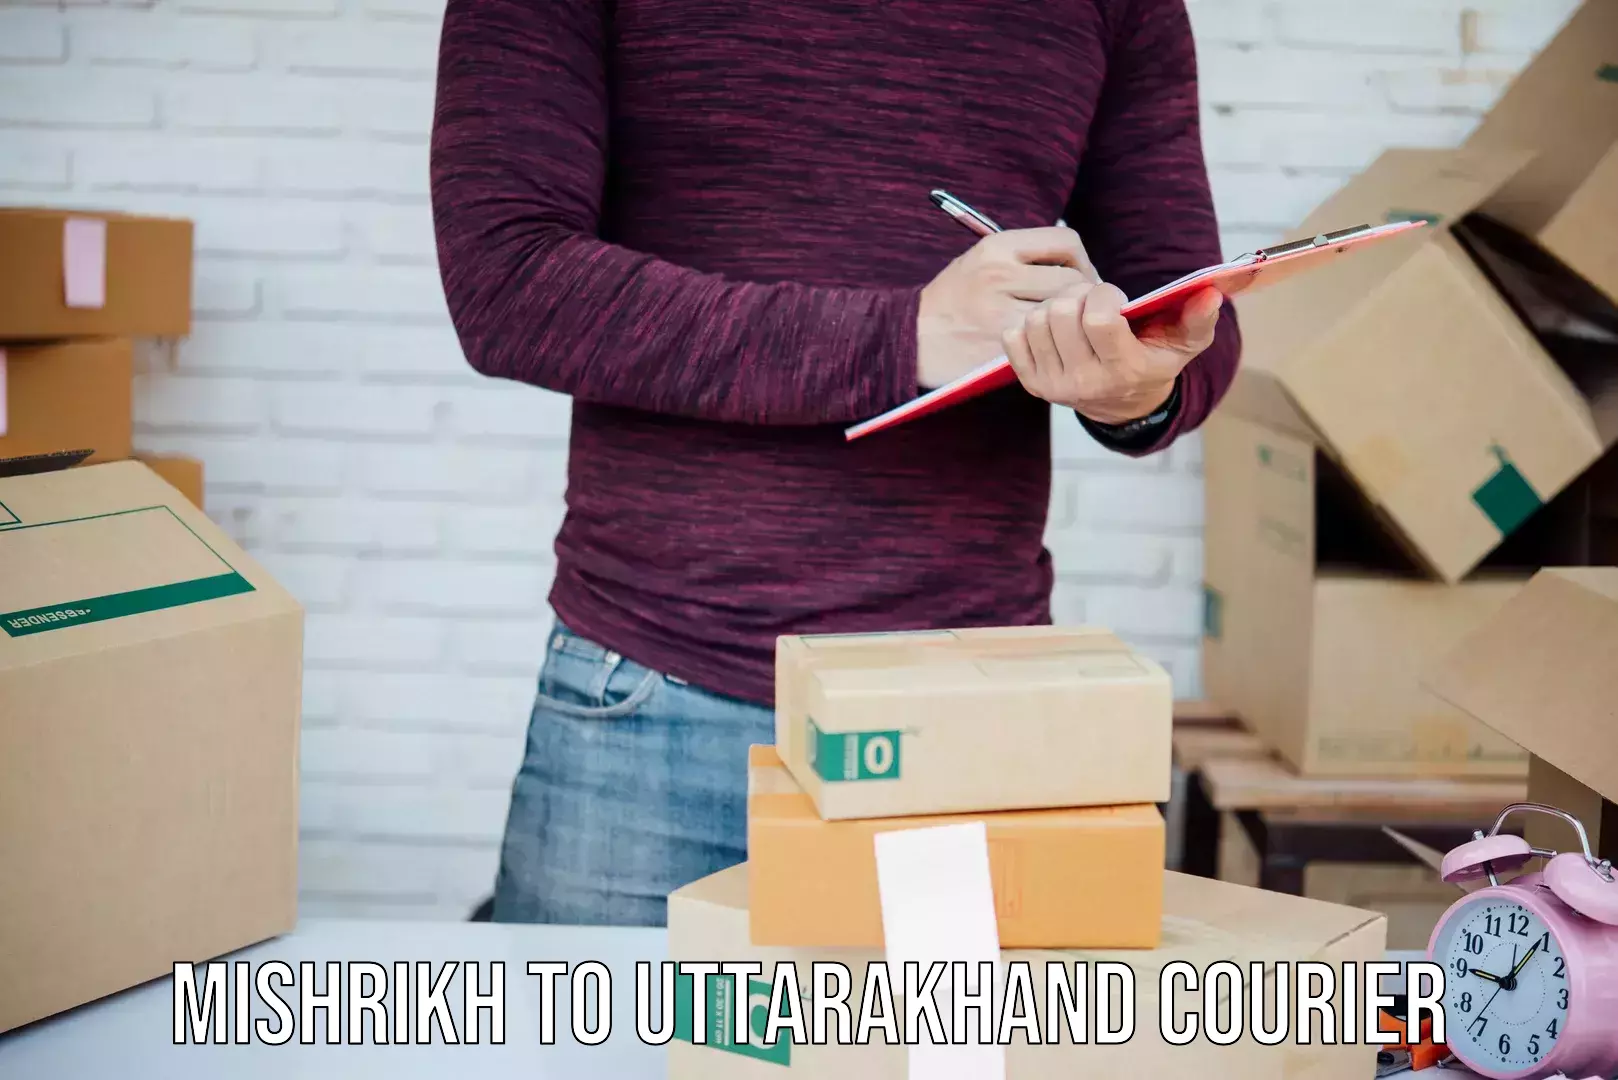 Nationwide parcel services Mishrikh to Uttarakhand